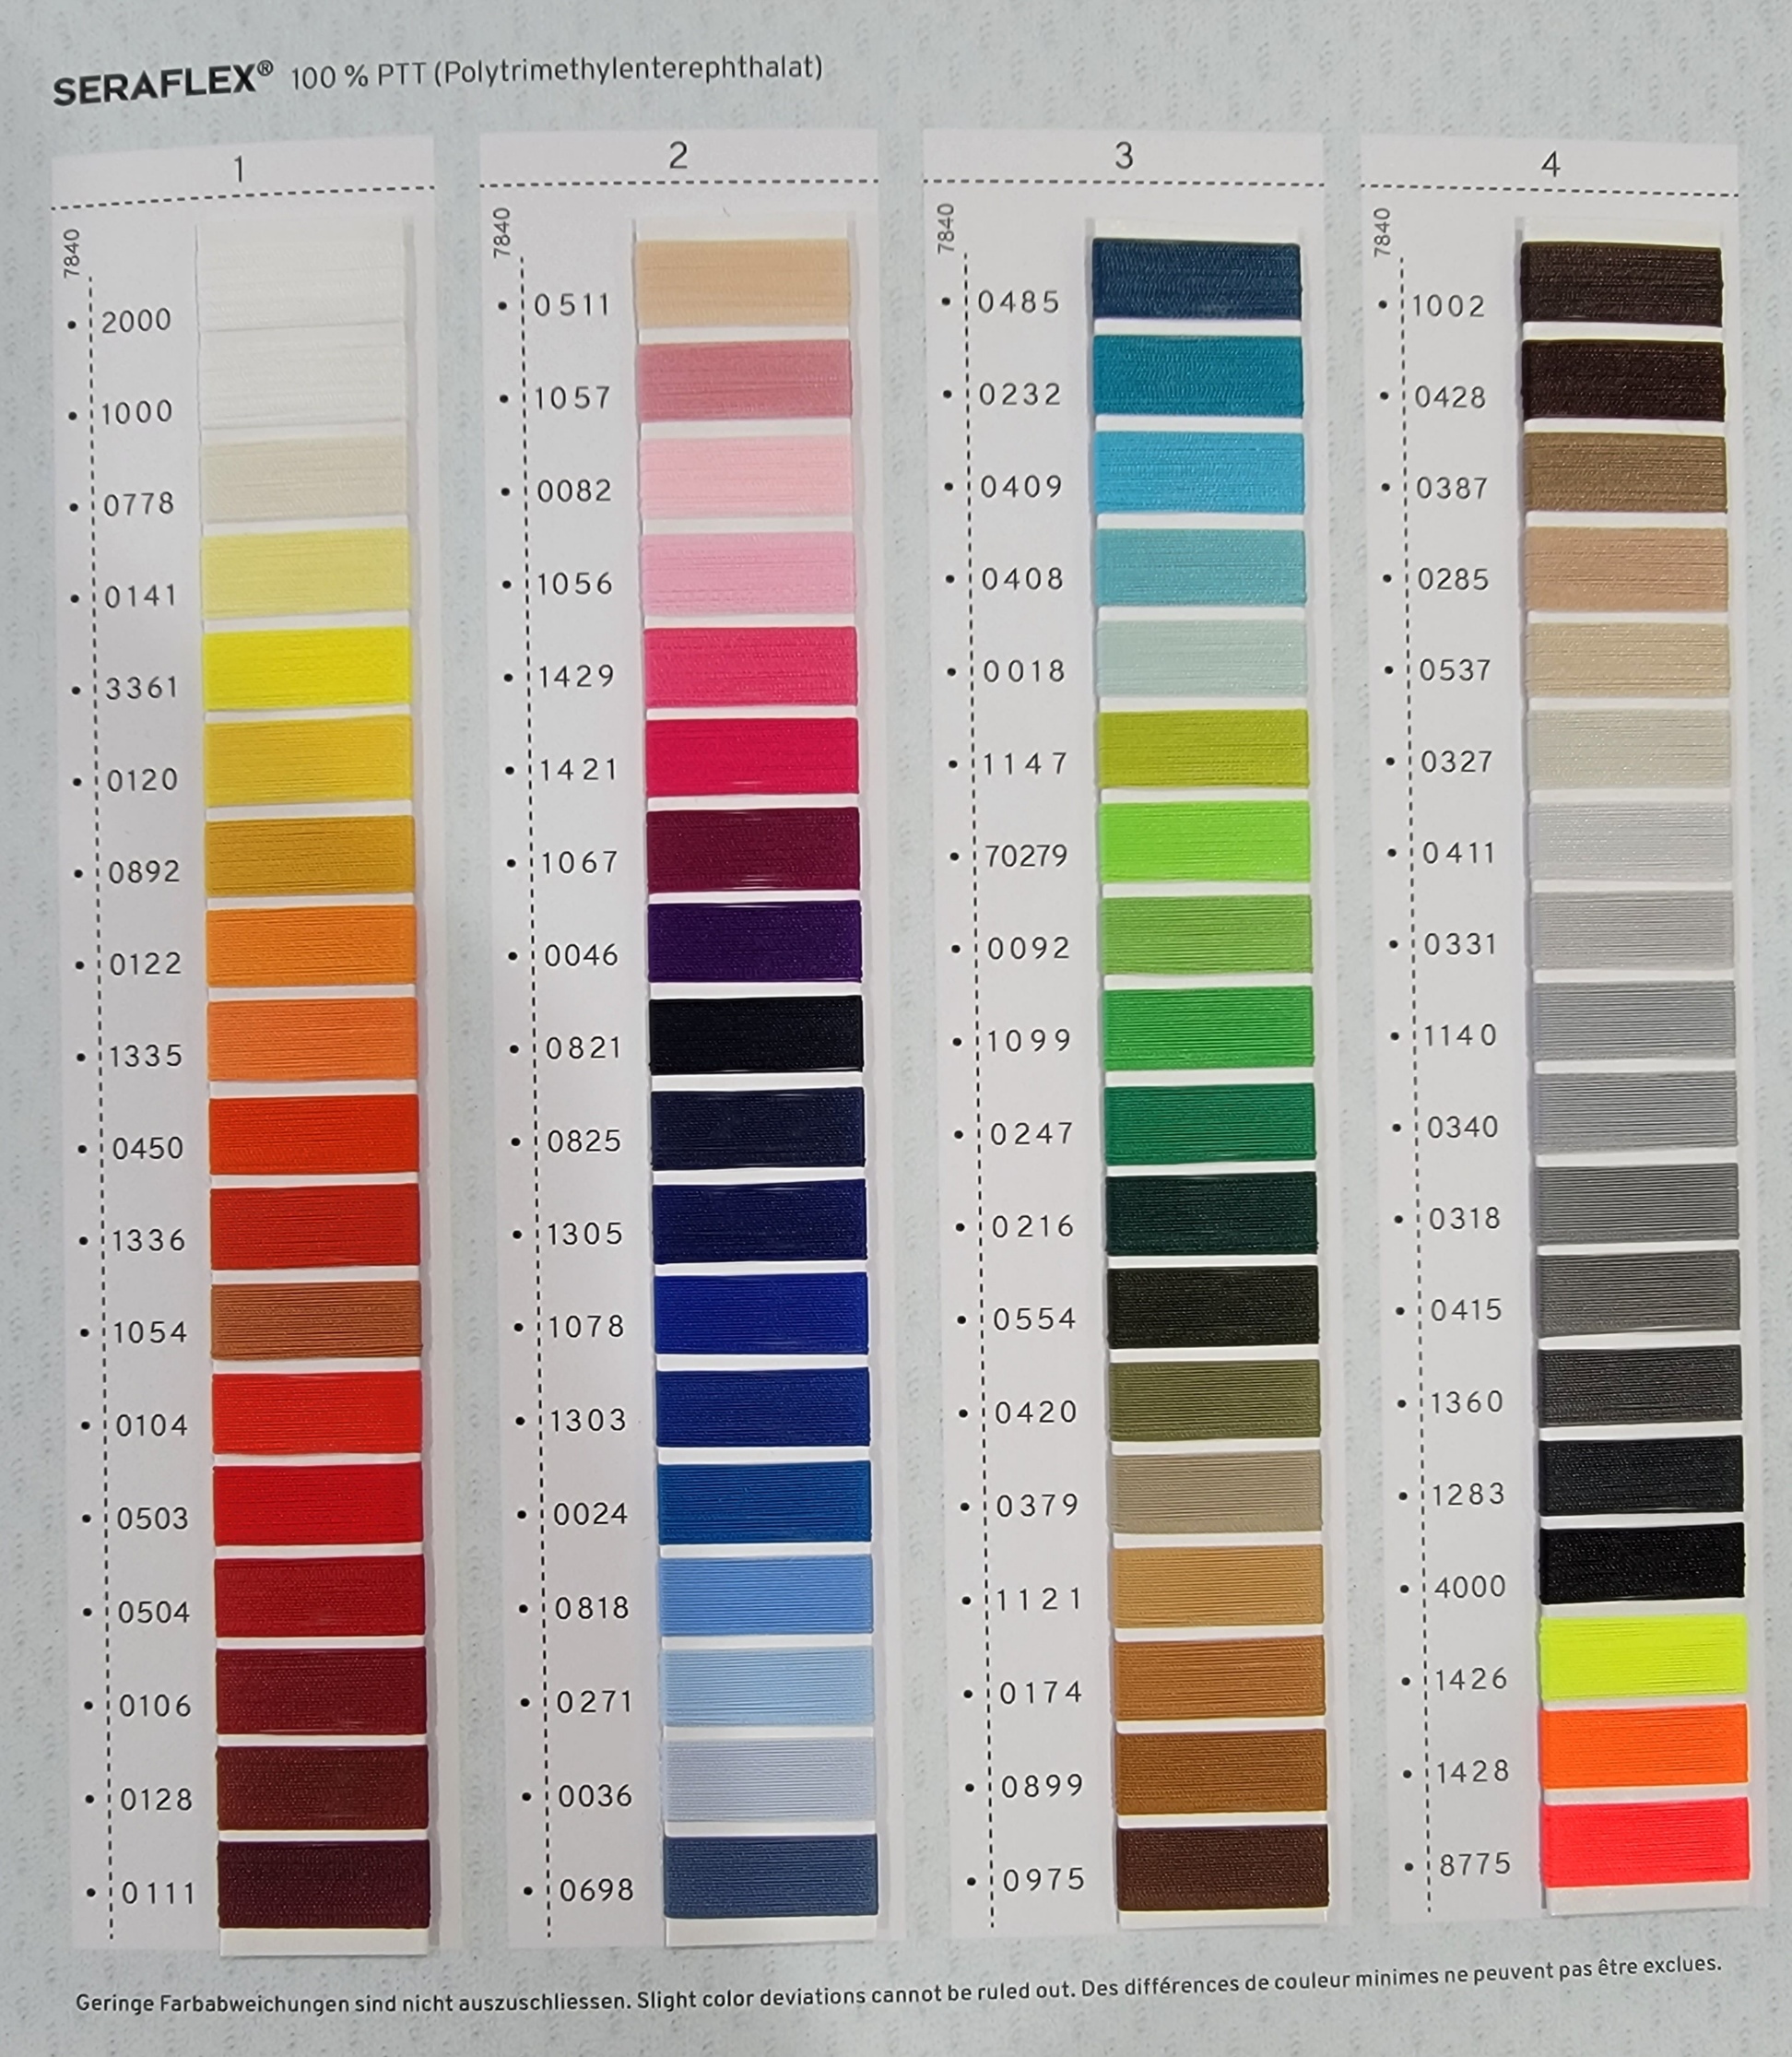 Sew-all Thread Set - Gutermann - Basic Colors 20 spools